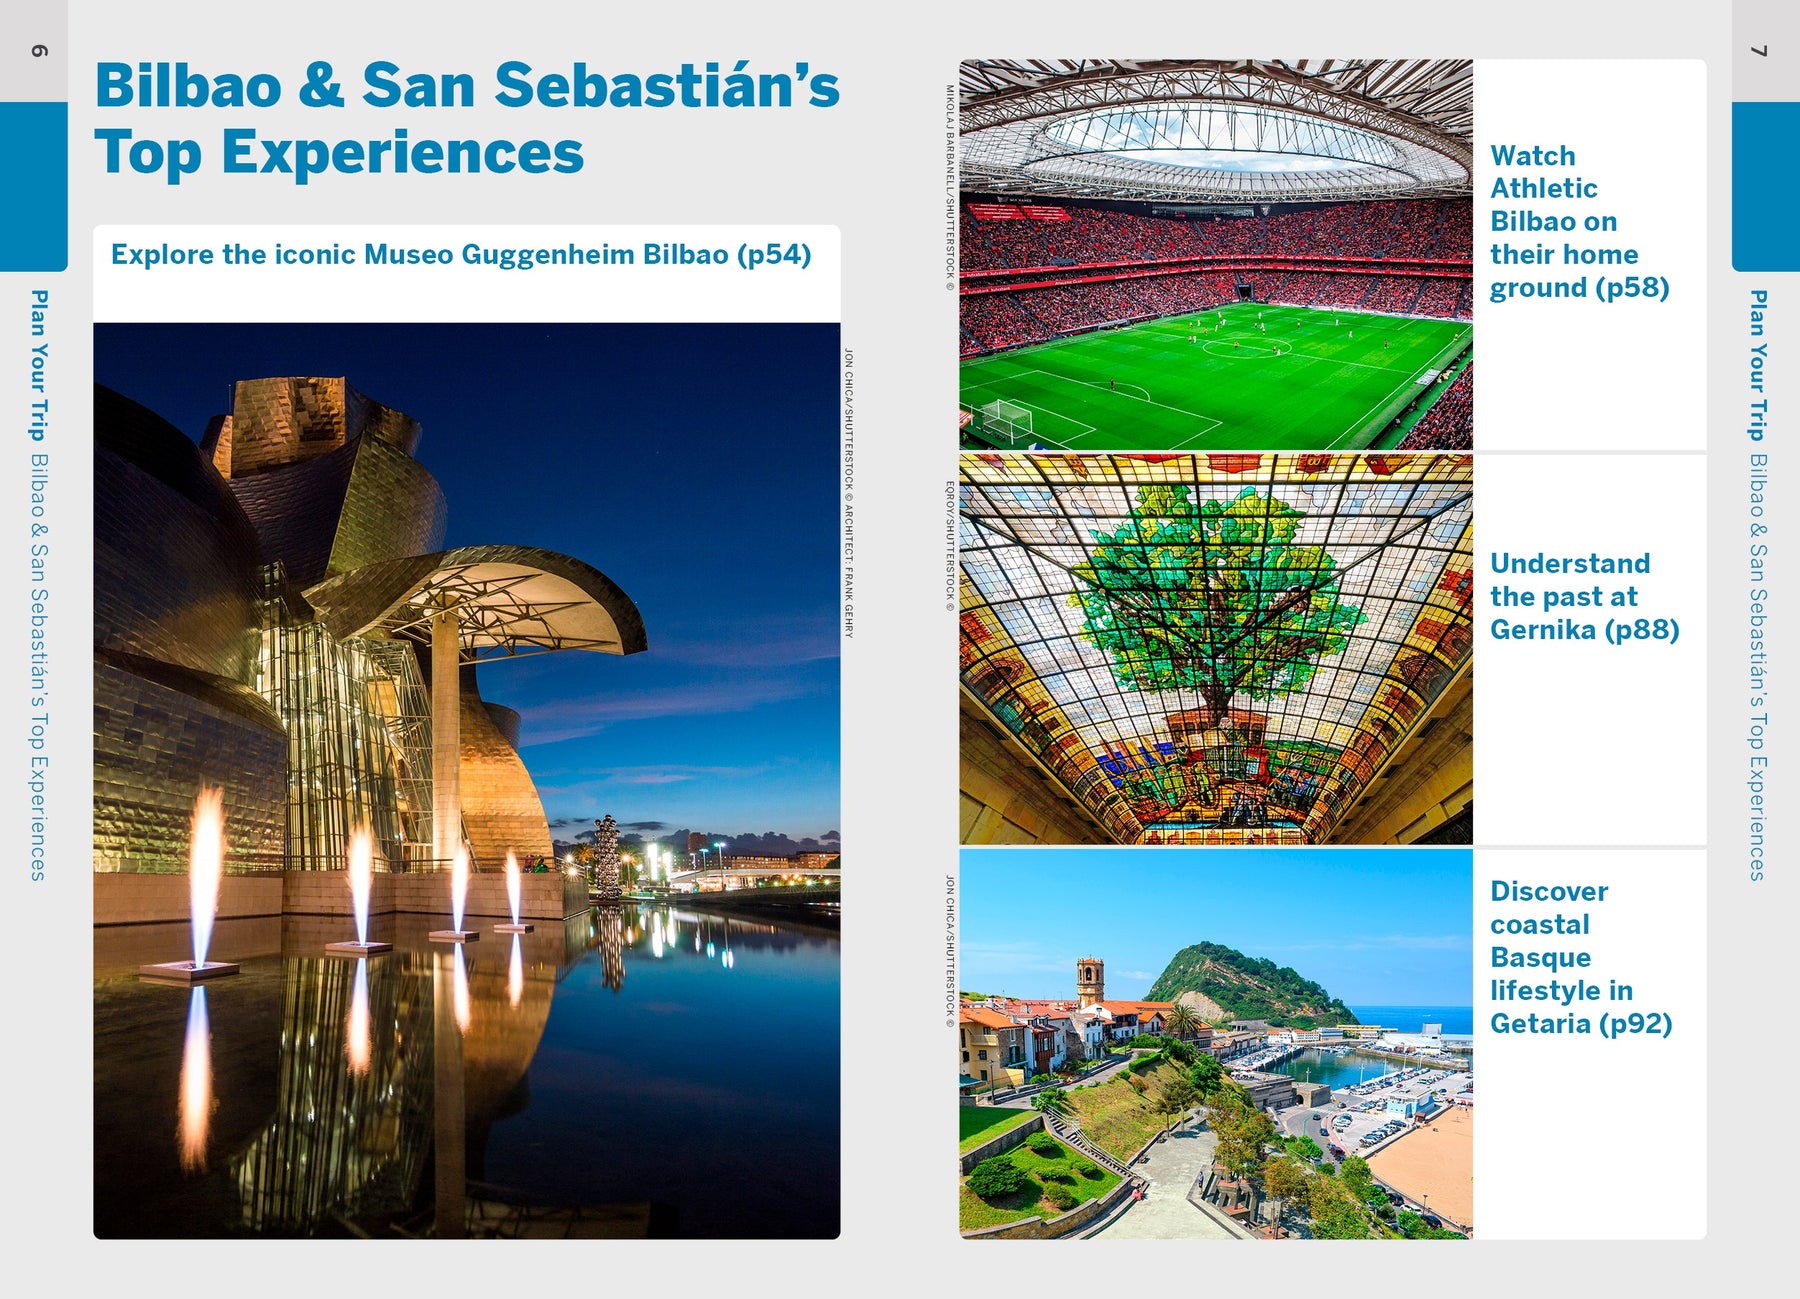 Pocket Bilbao & San Sebastian - Book